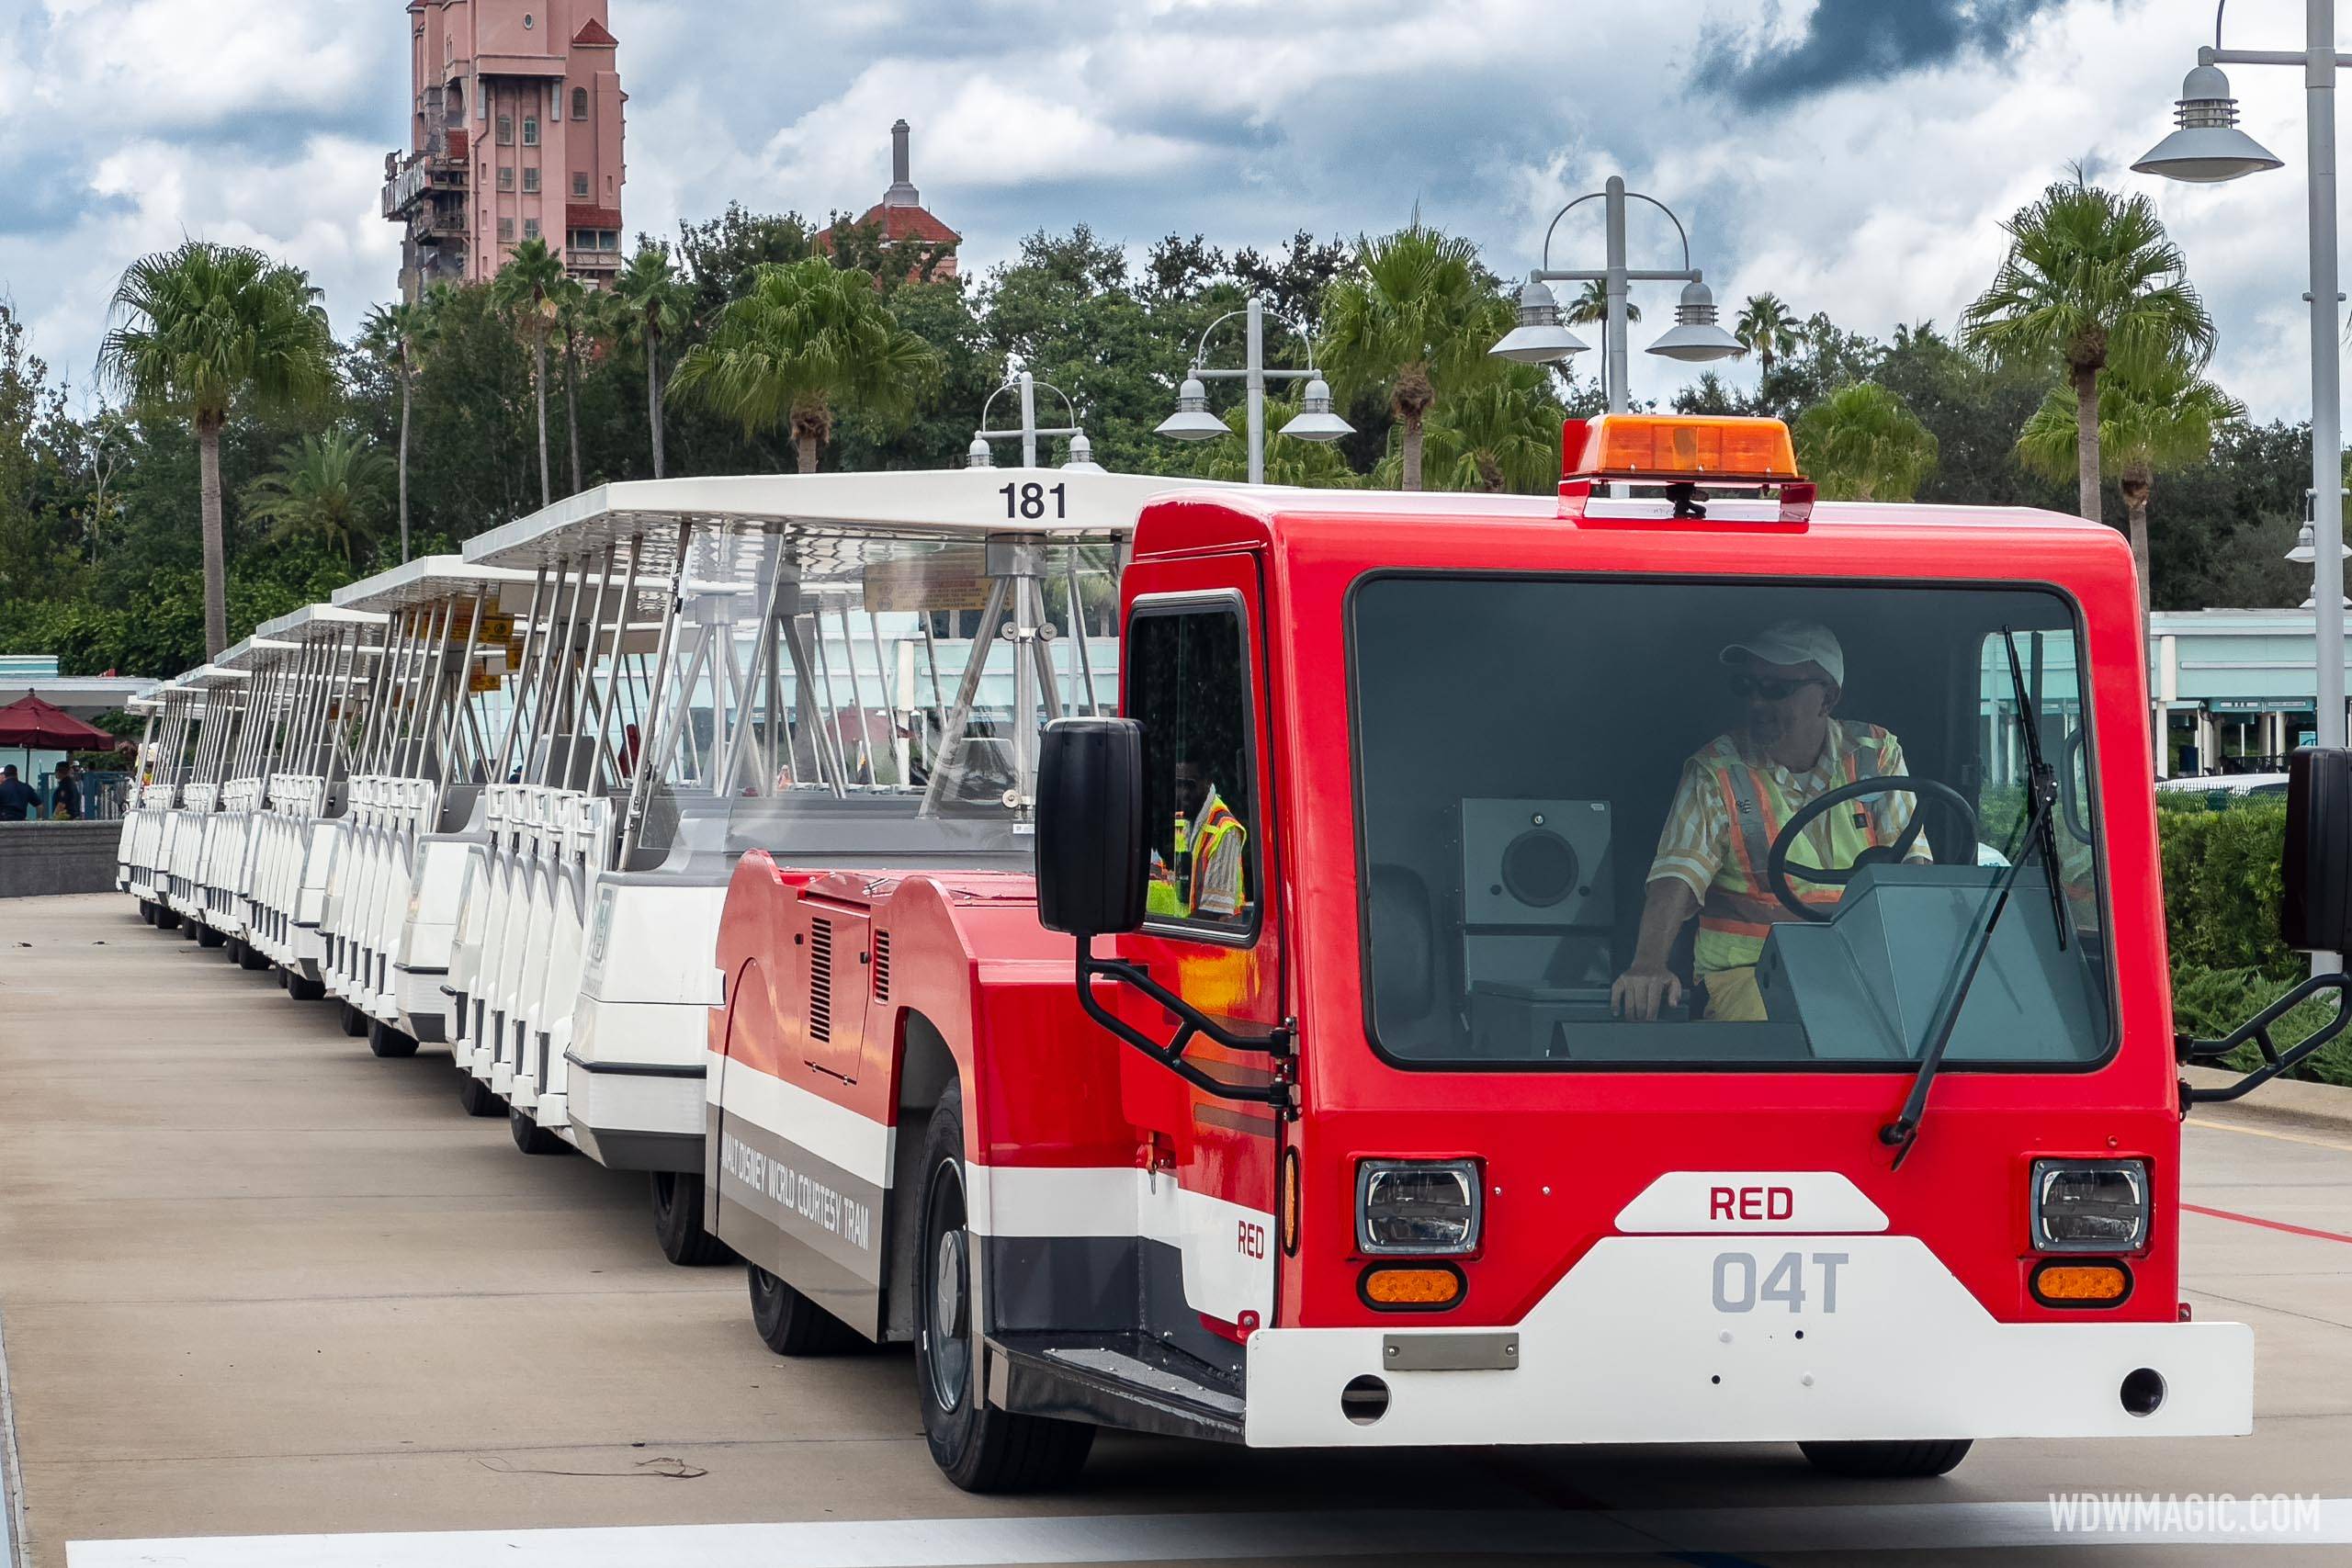 Walt Disney World parking lot trams now testing at Disney's Hollywood Studios